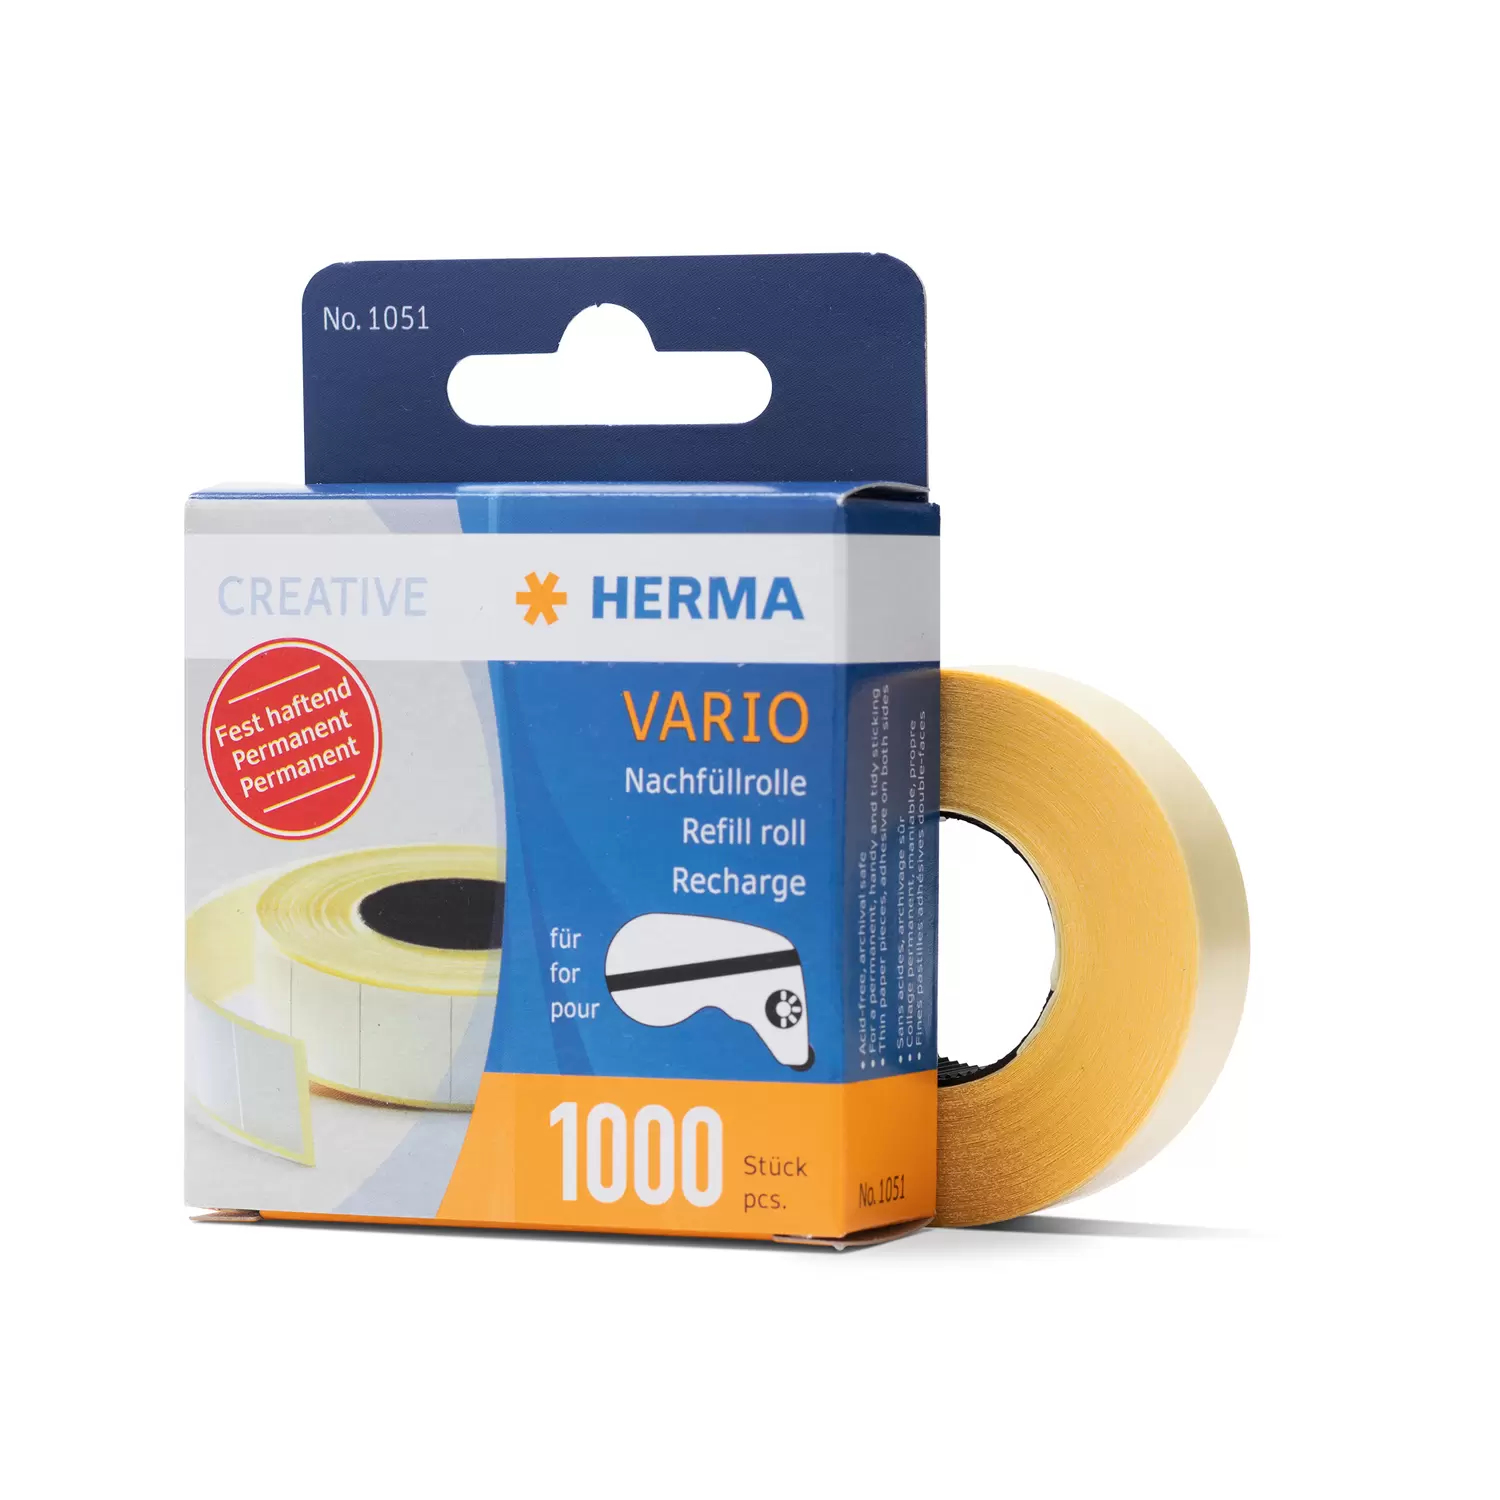 herma herma vario refill pack, permanent, 1000 paper stickers, uomo